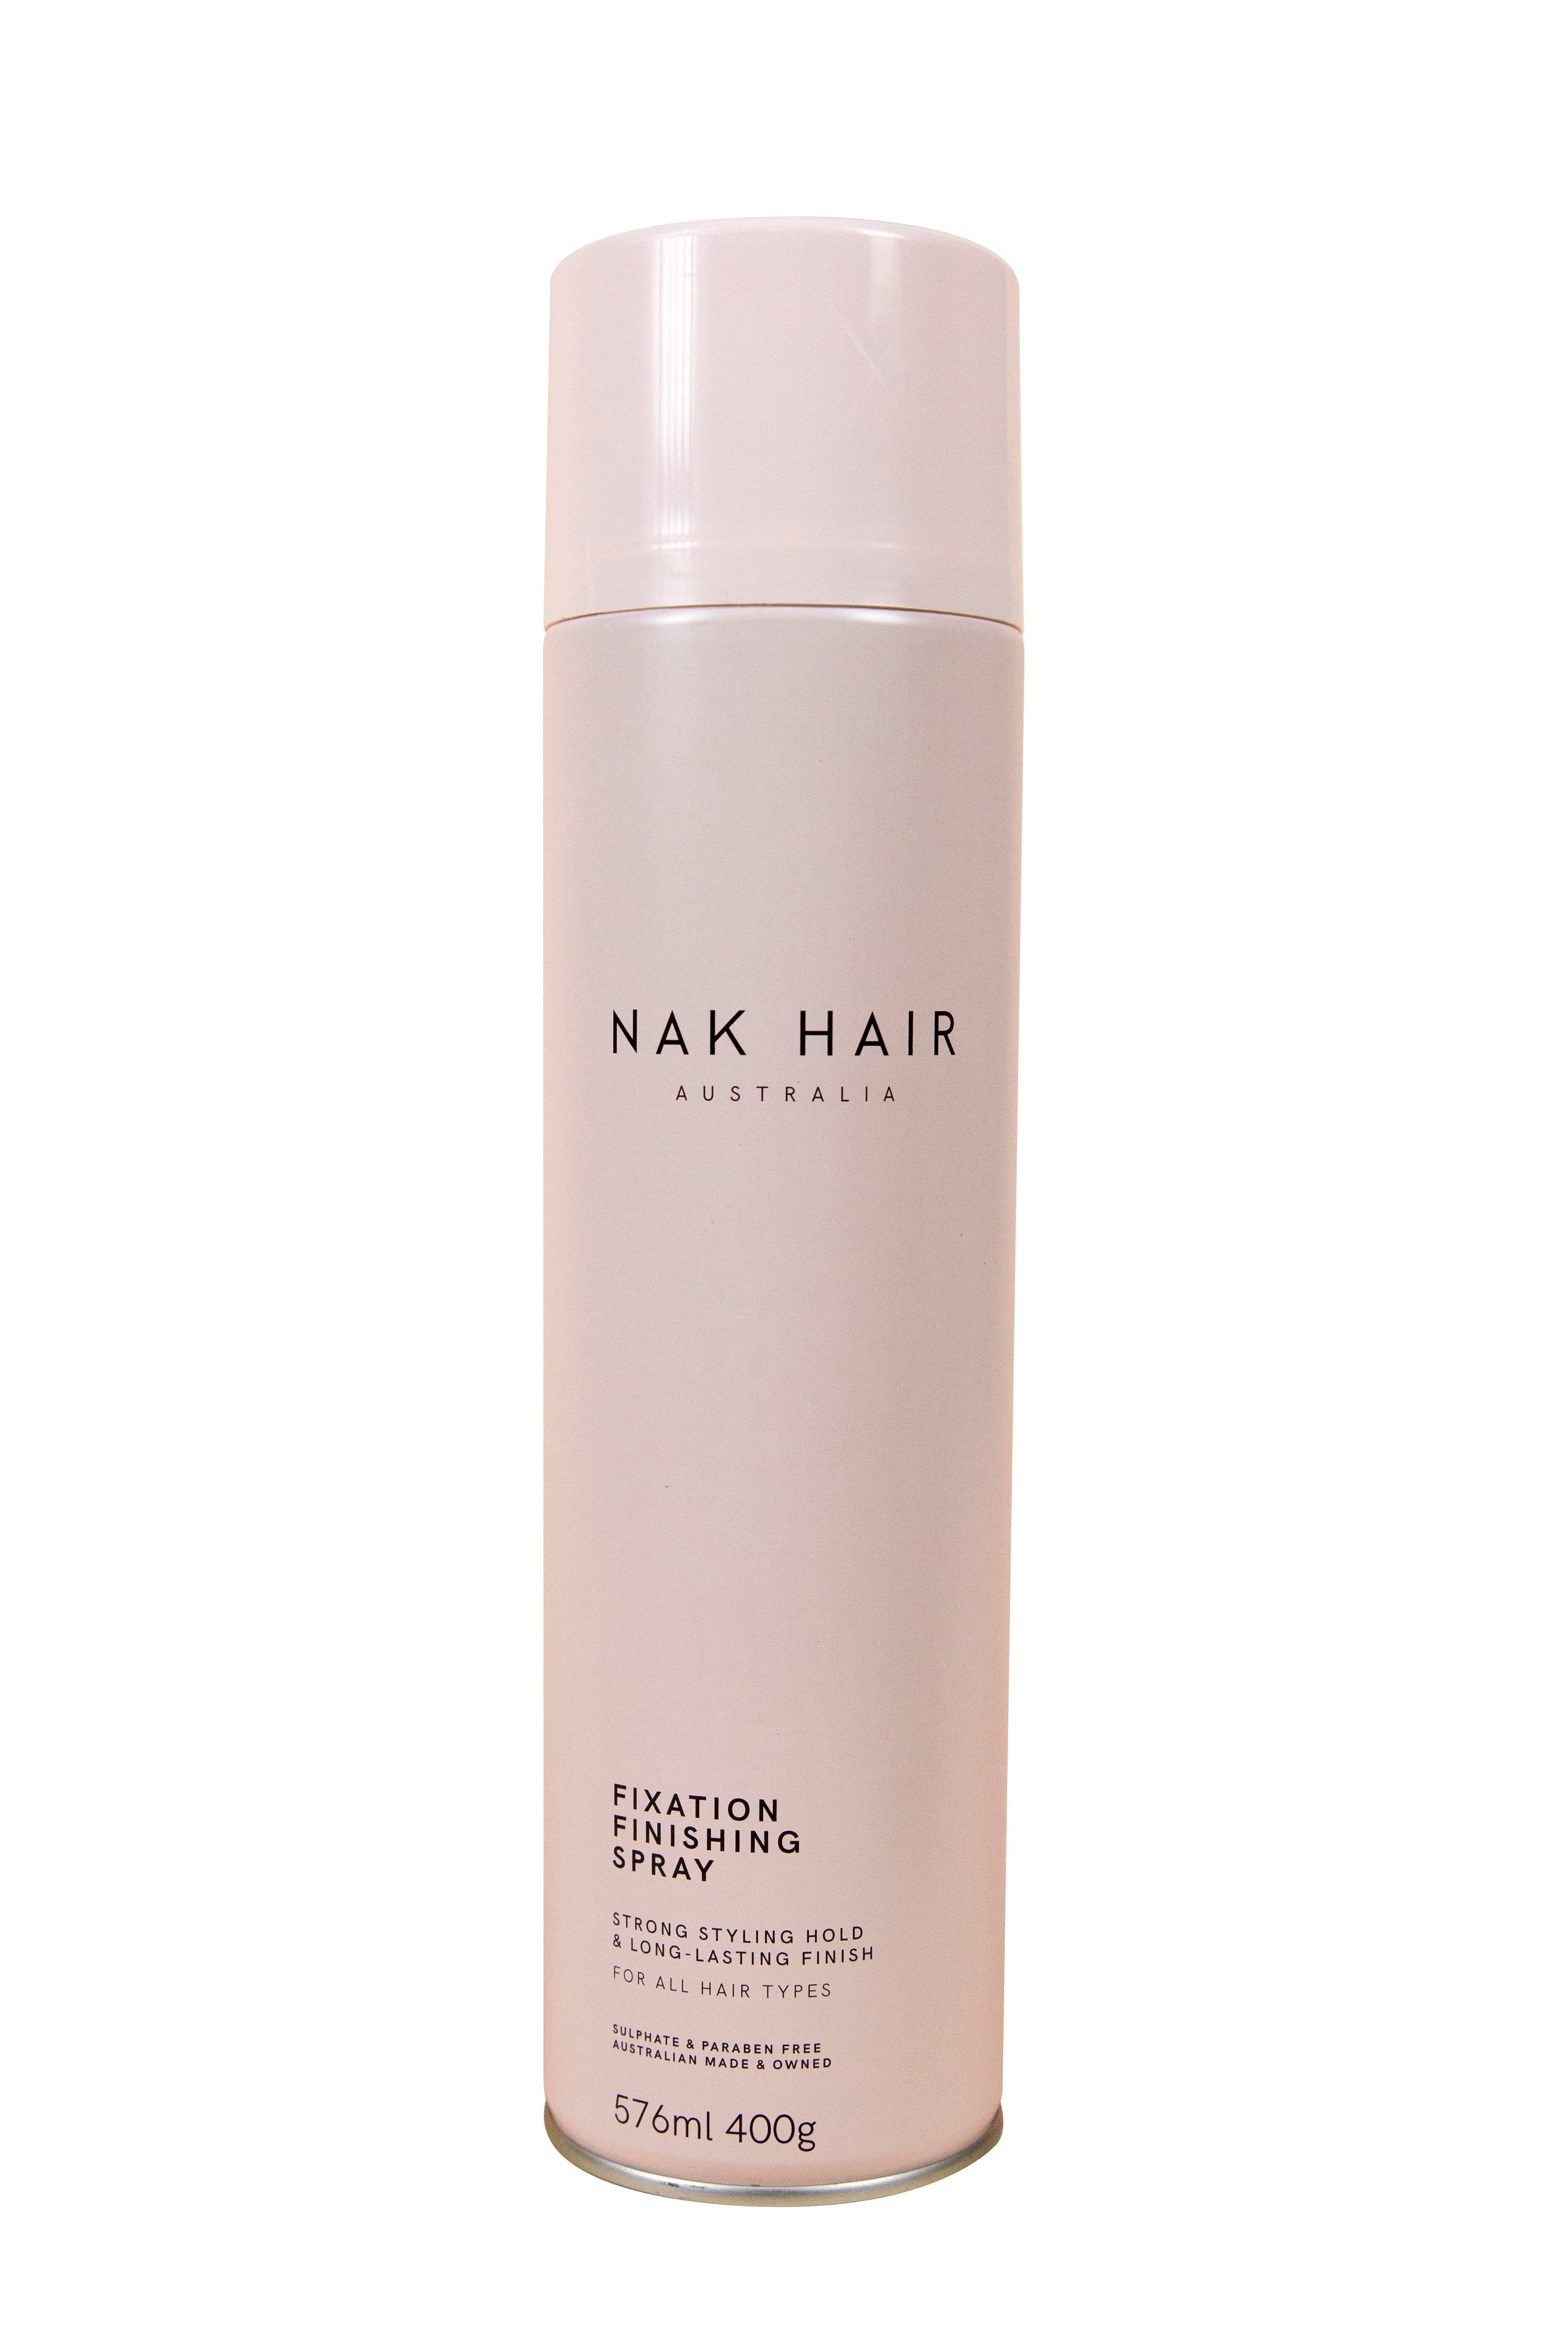 Nak Hair Fixation Finishing Spray - 400g